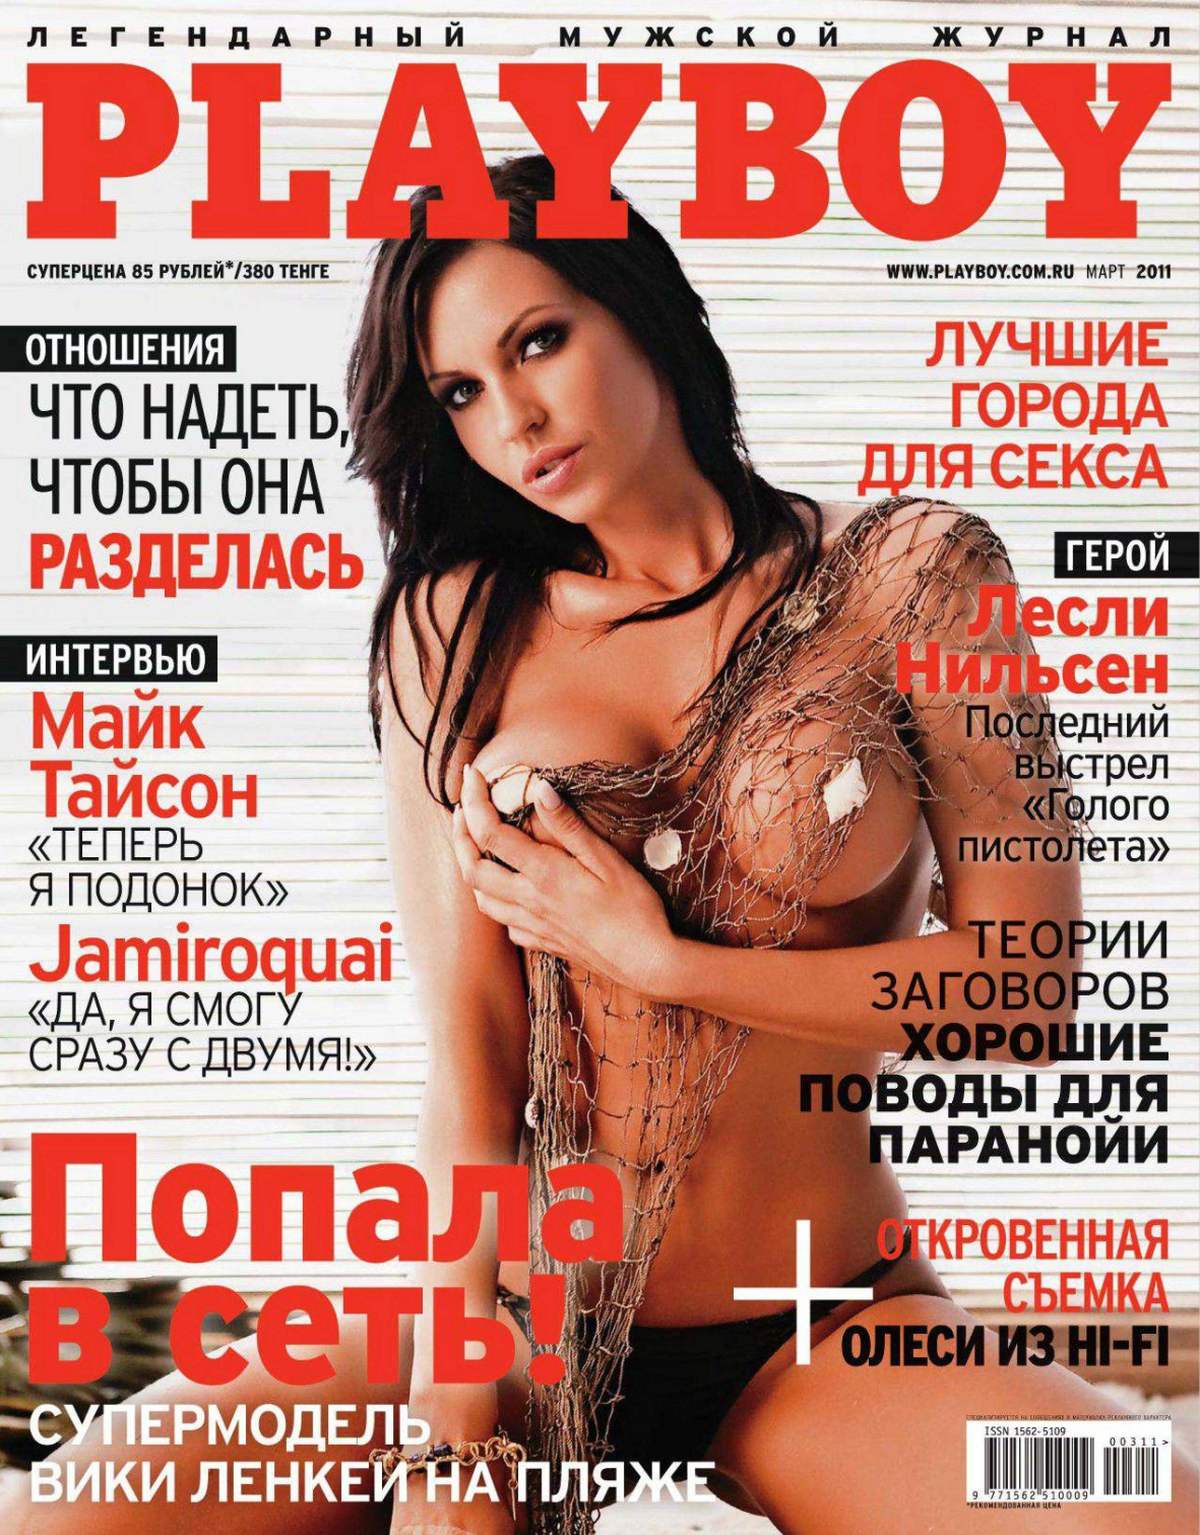 Viki Lenkei naked in Playboy Russia